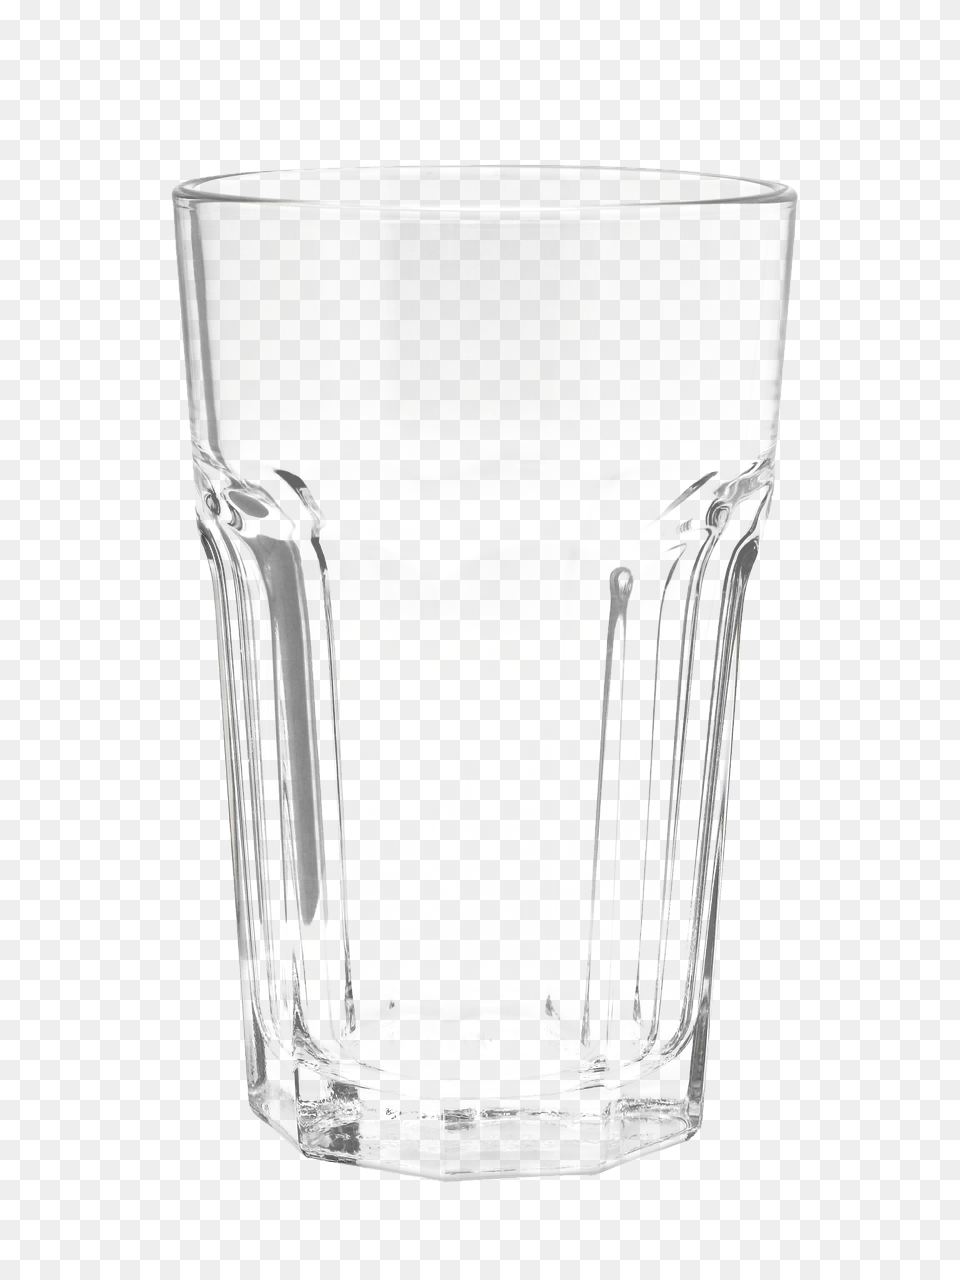 Water Glass Pic Vaso Transparente, Jar, Pottery, Vase, Bottle Png